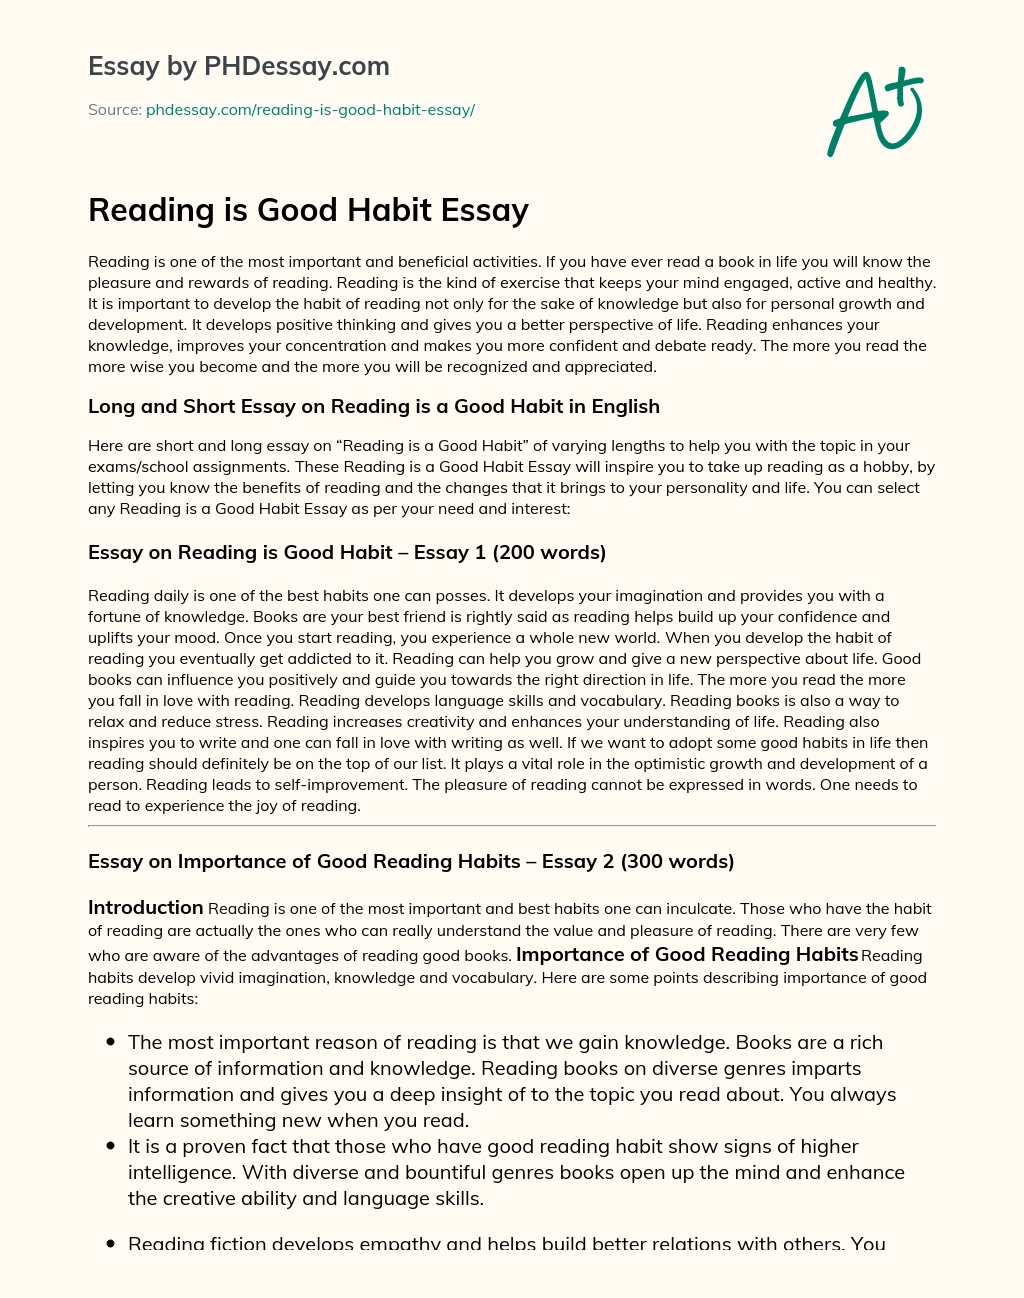 Reading is Good Habit Essay essay